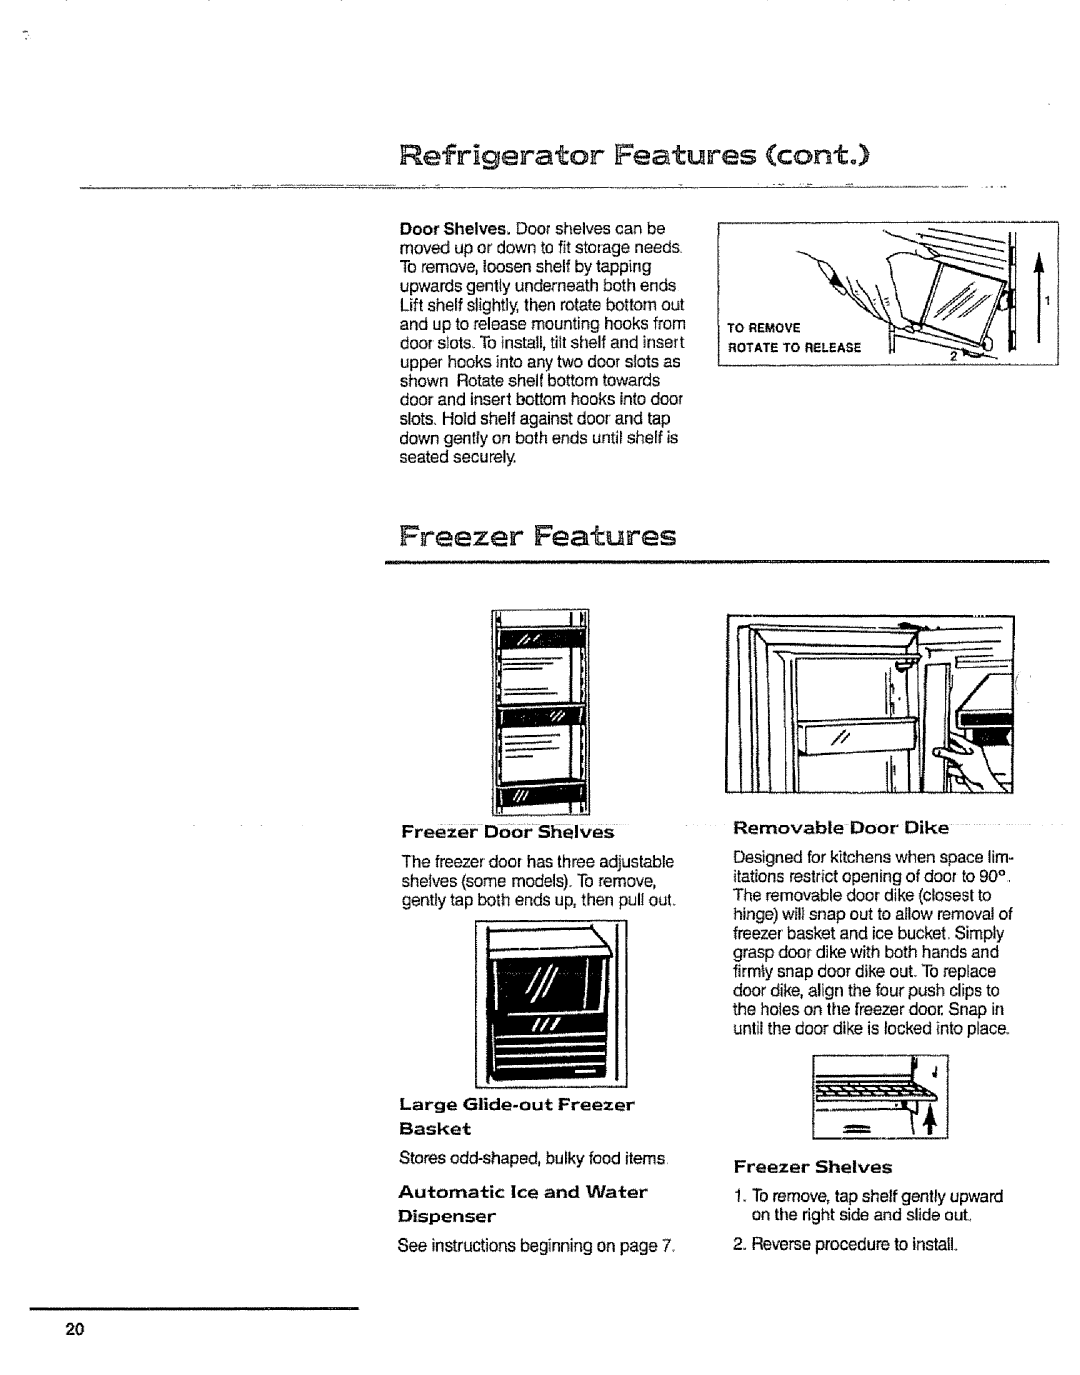 Sears 10062603 manual RefrigeratorFeatures cont, F reezeF Features, Freezer Door Shelves, Large Glide-outFreezer Basket 